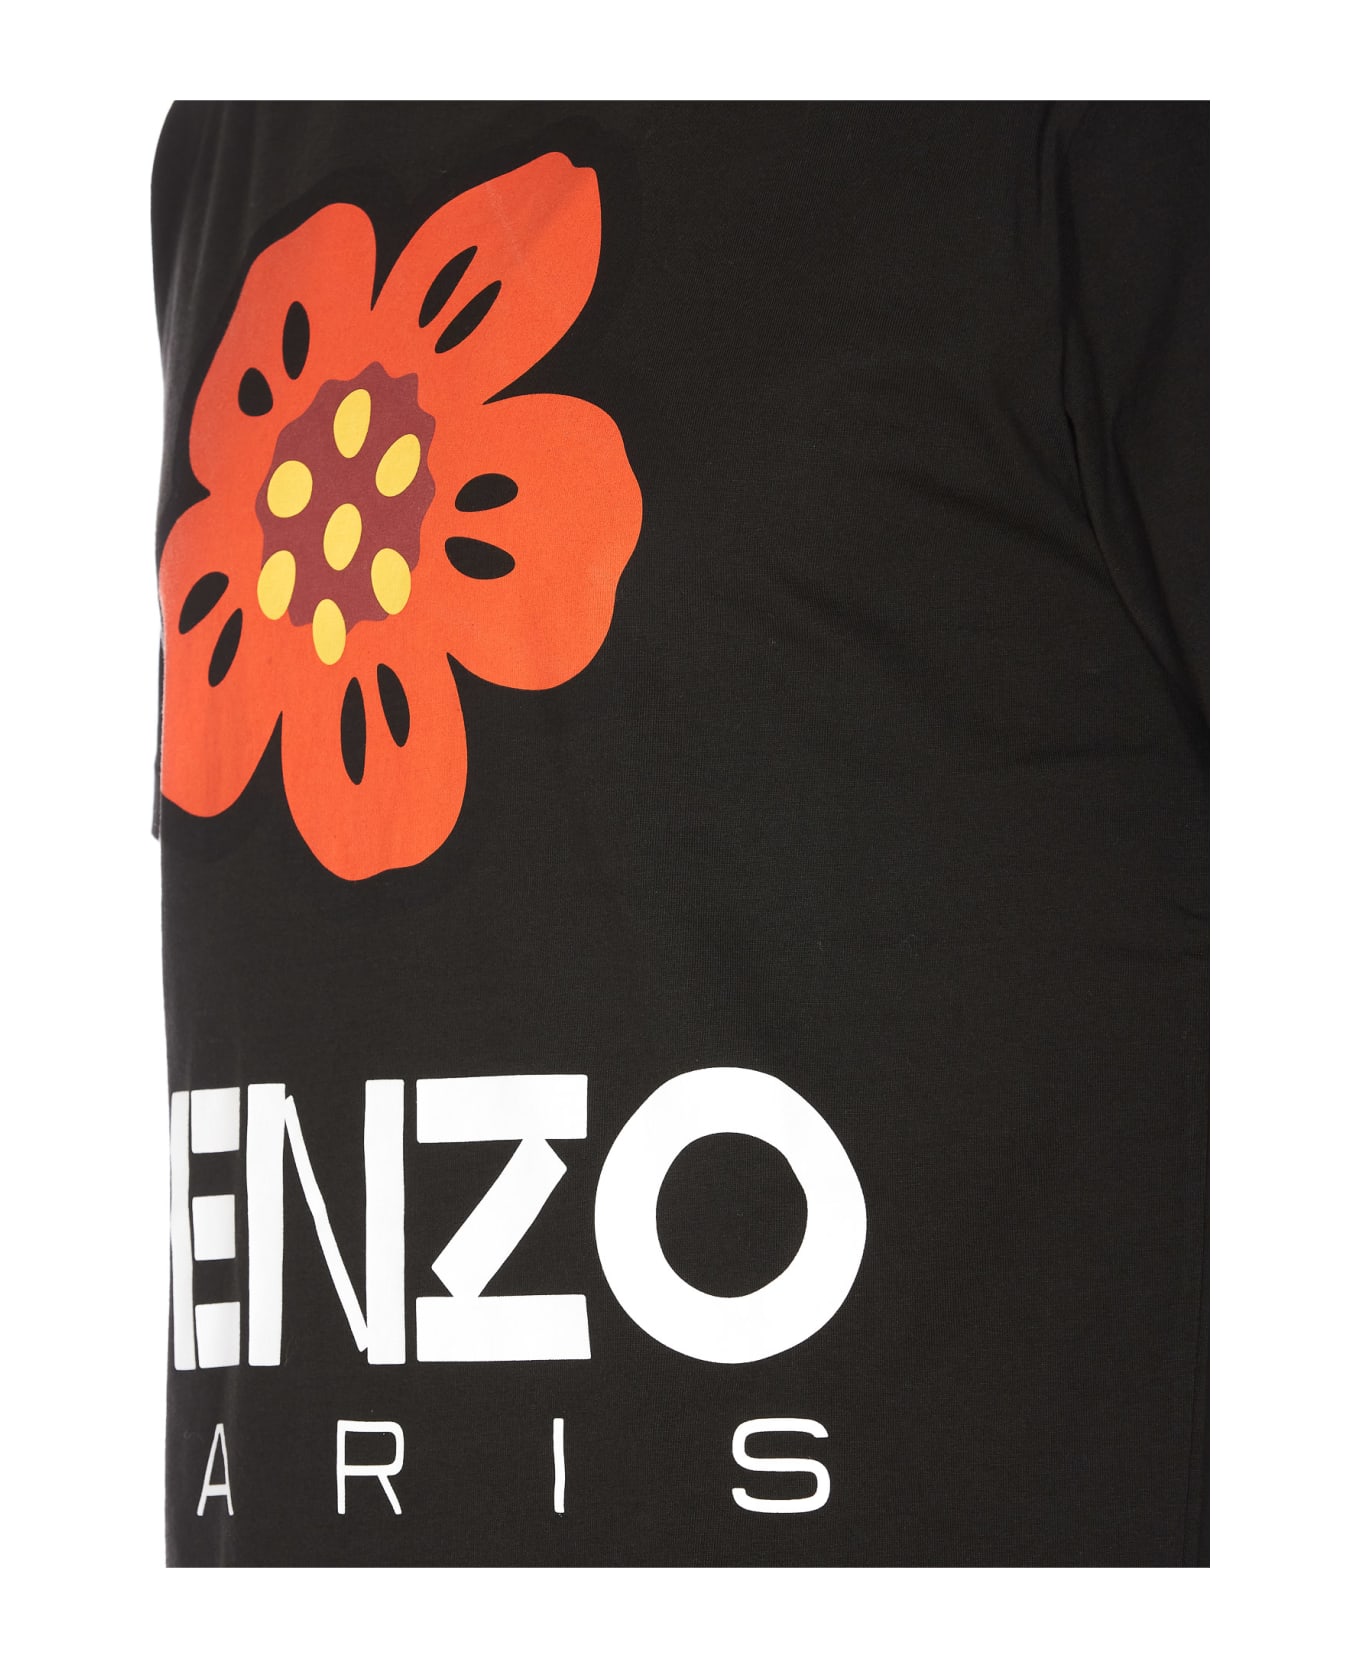 Kenzo Boke Flower T-shirt Kenzo - BLACK